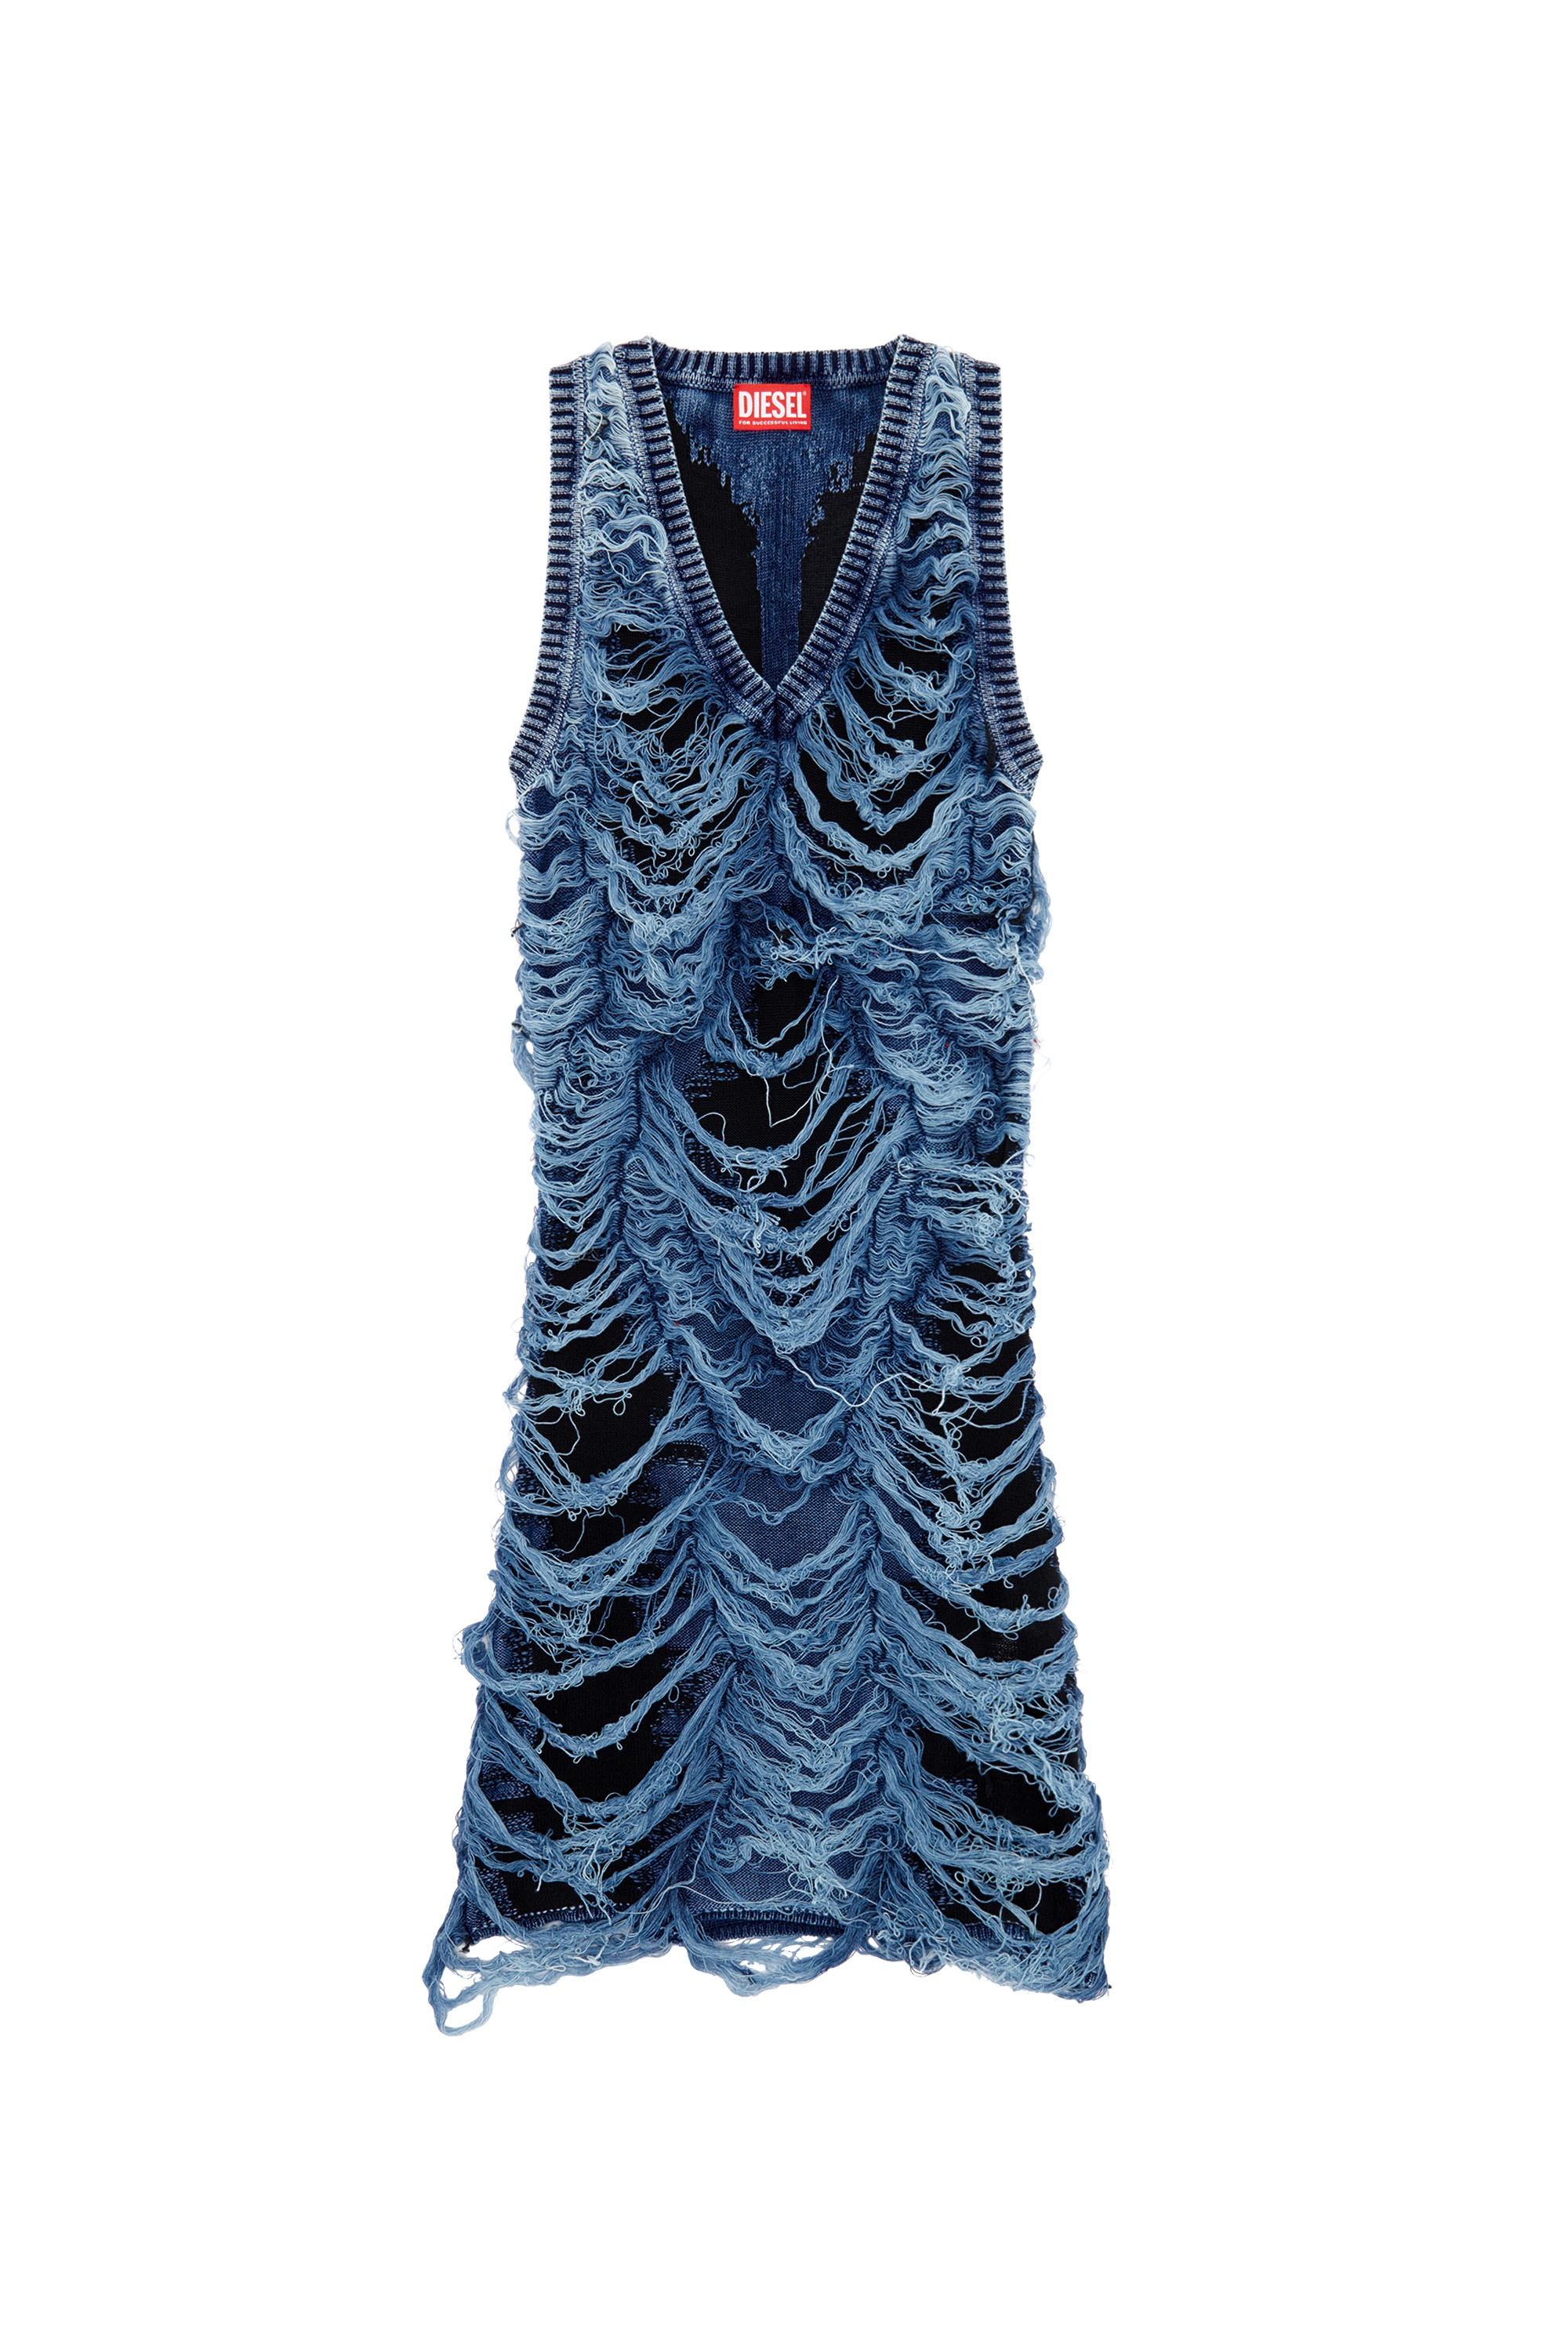 Diesel - M-BIANCA, Woman Short dress in destroyed indigo knit in Blue - Image 2